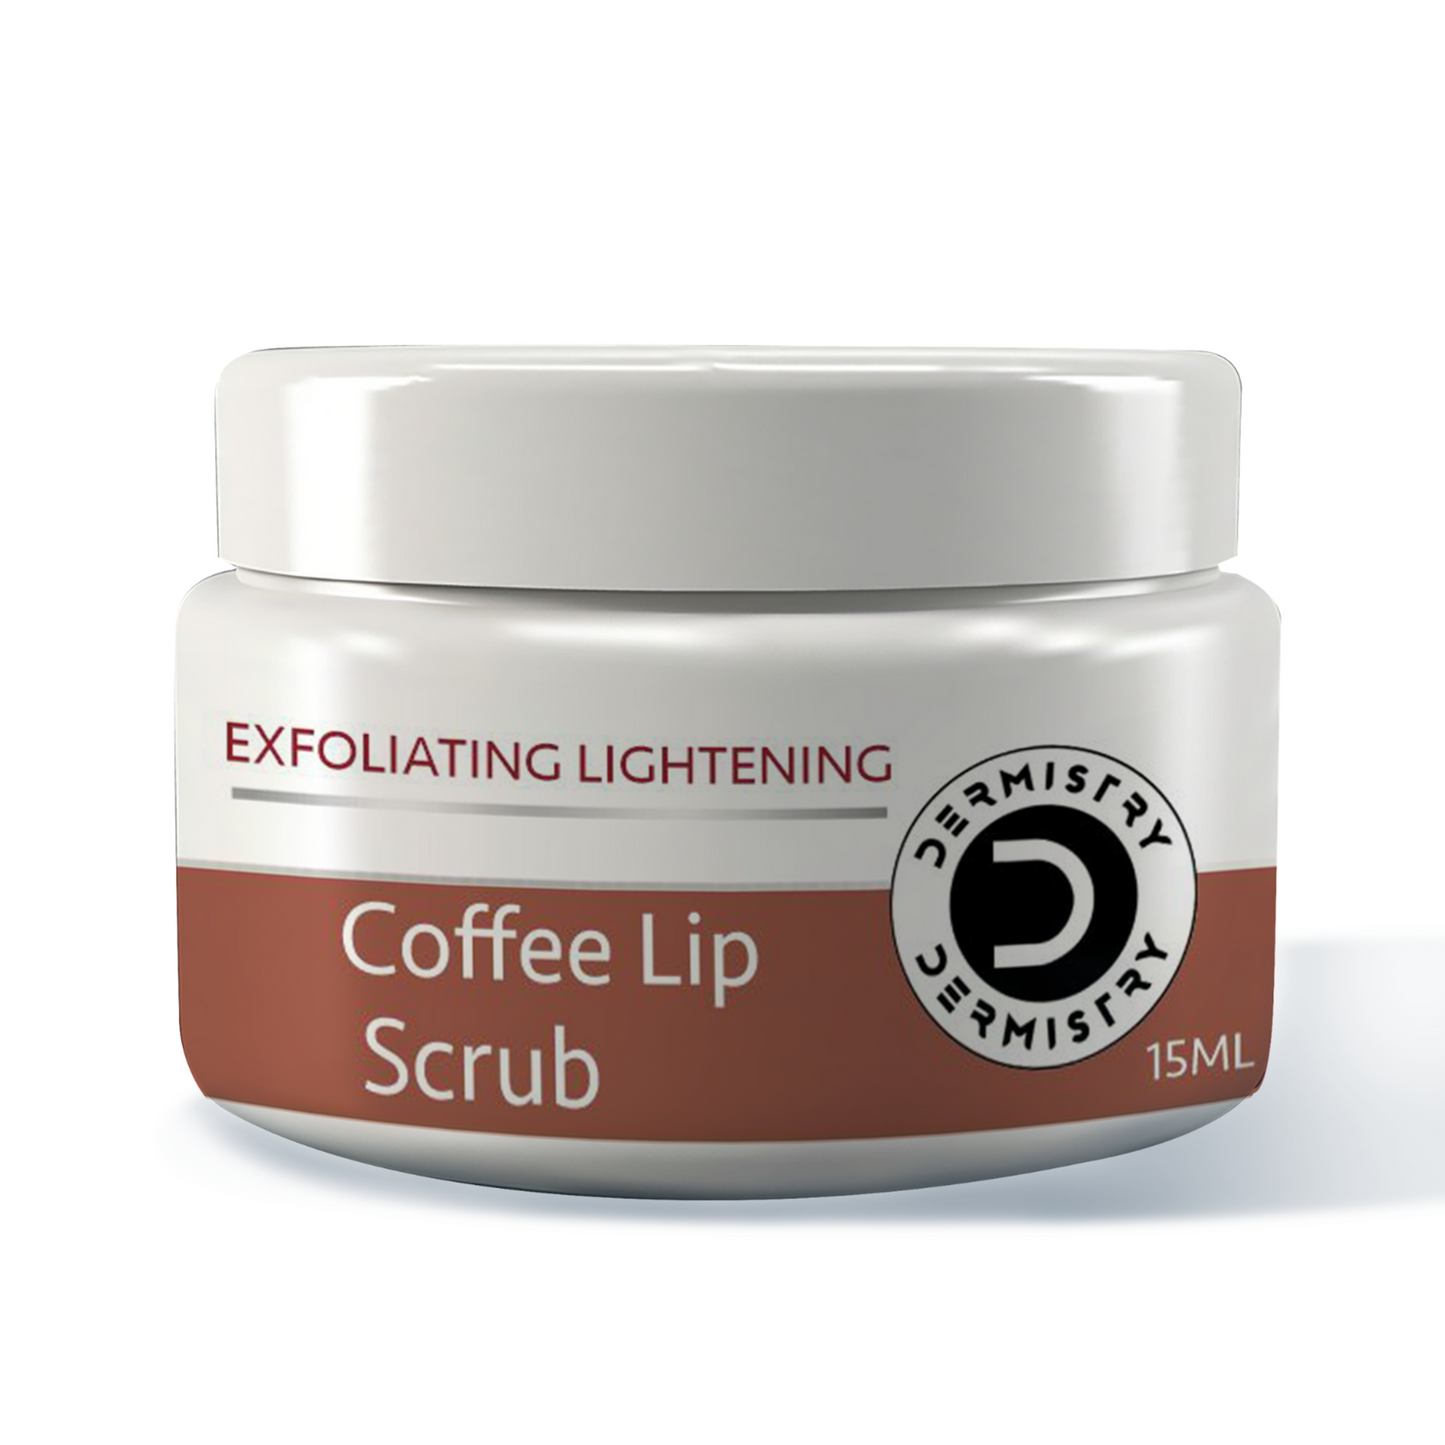 Dermistry Exfoliating Lightening Coffee Lip Scrub, 15ml